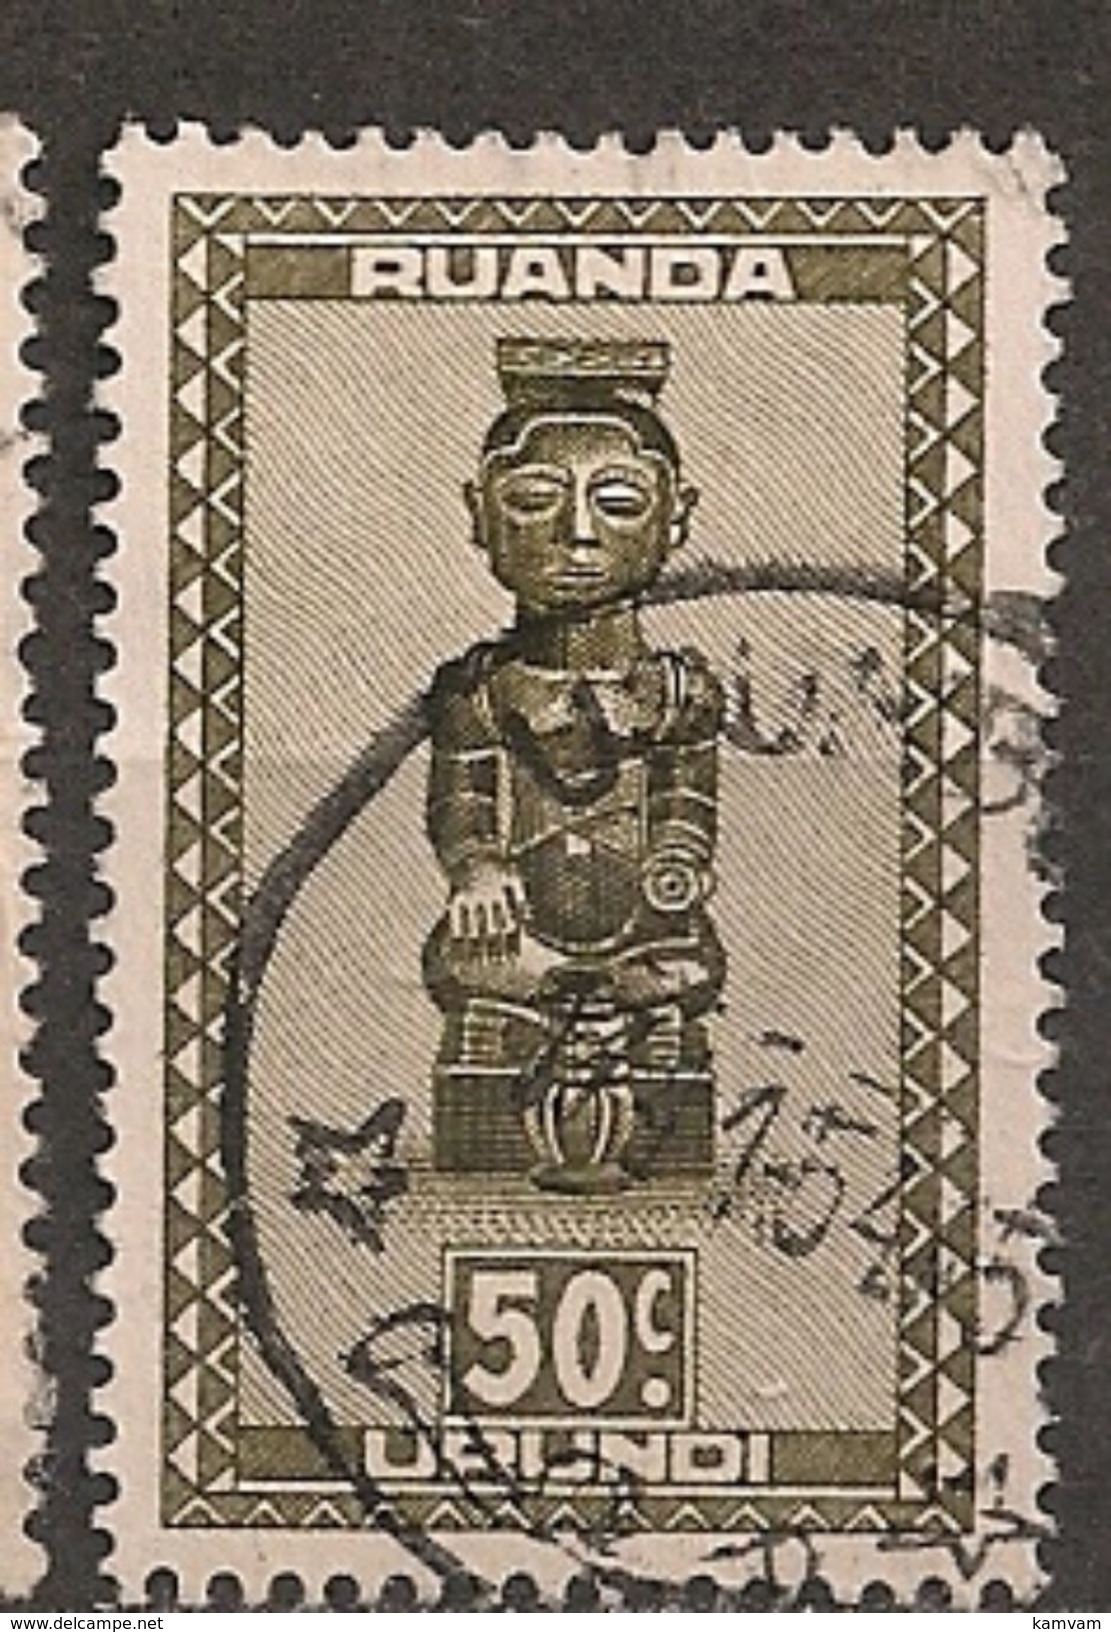 CONGO RUANDA URUNDI 159 USUMBURA - Used Stamps